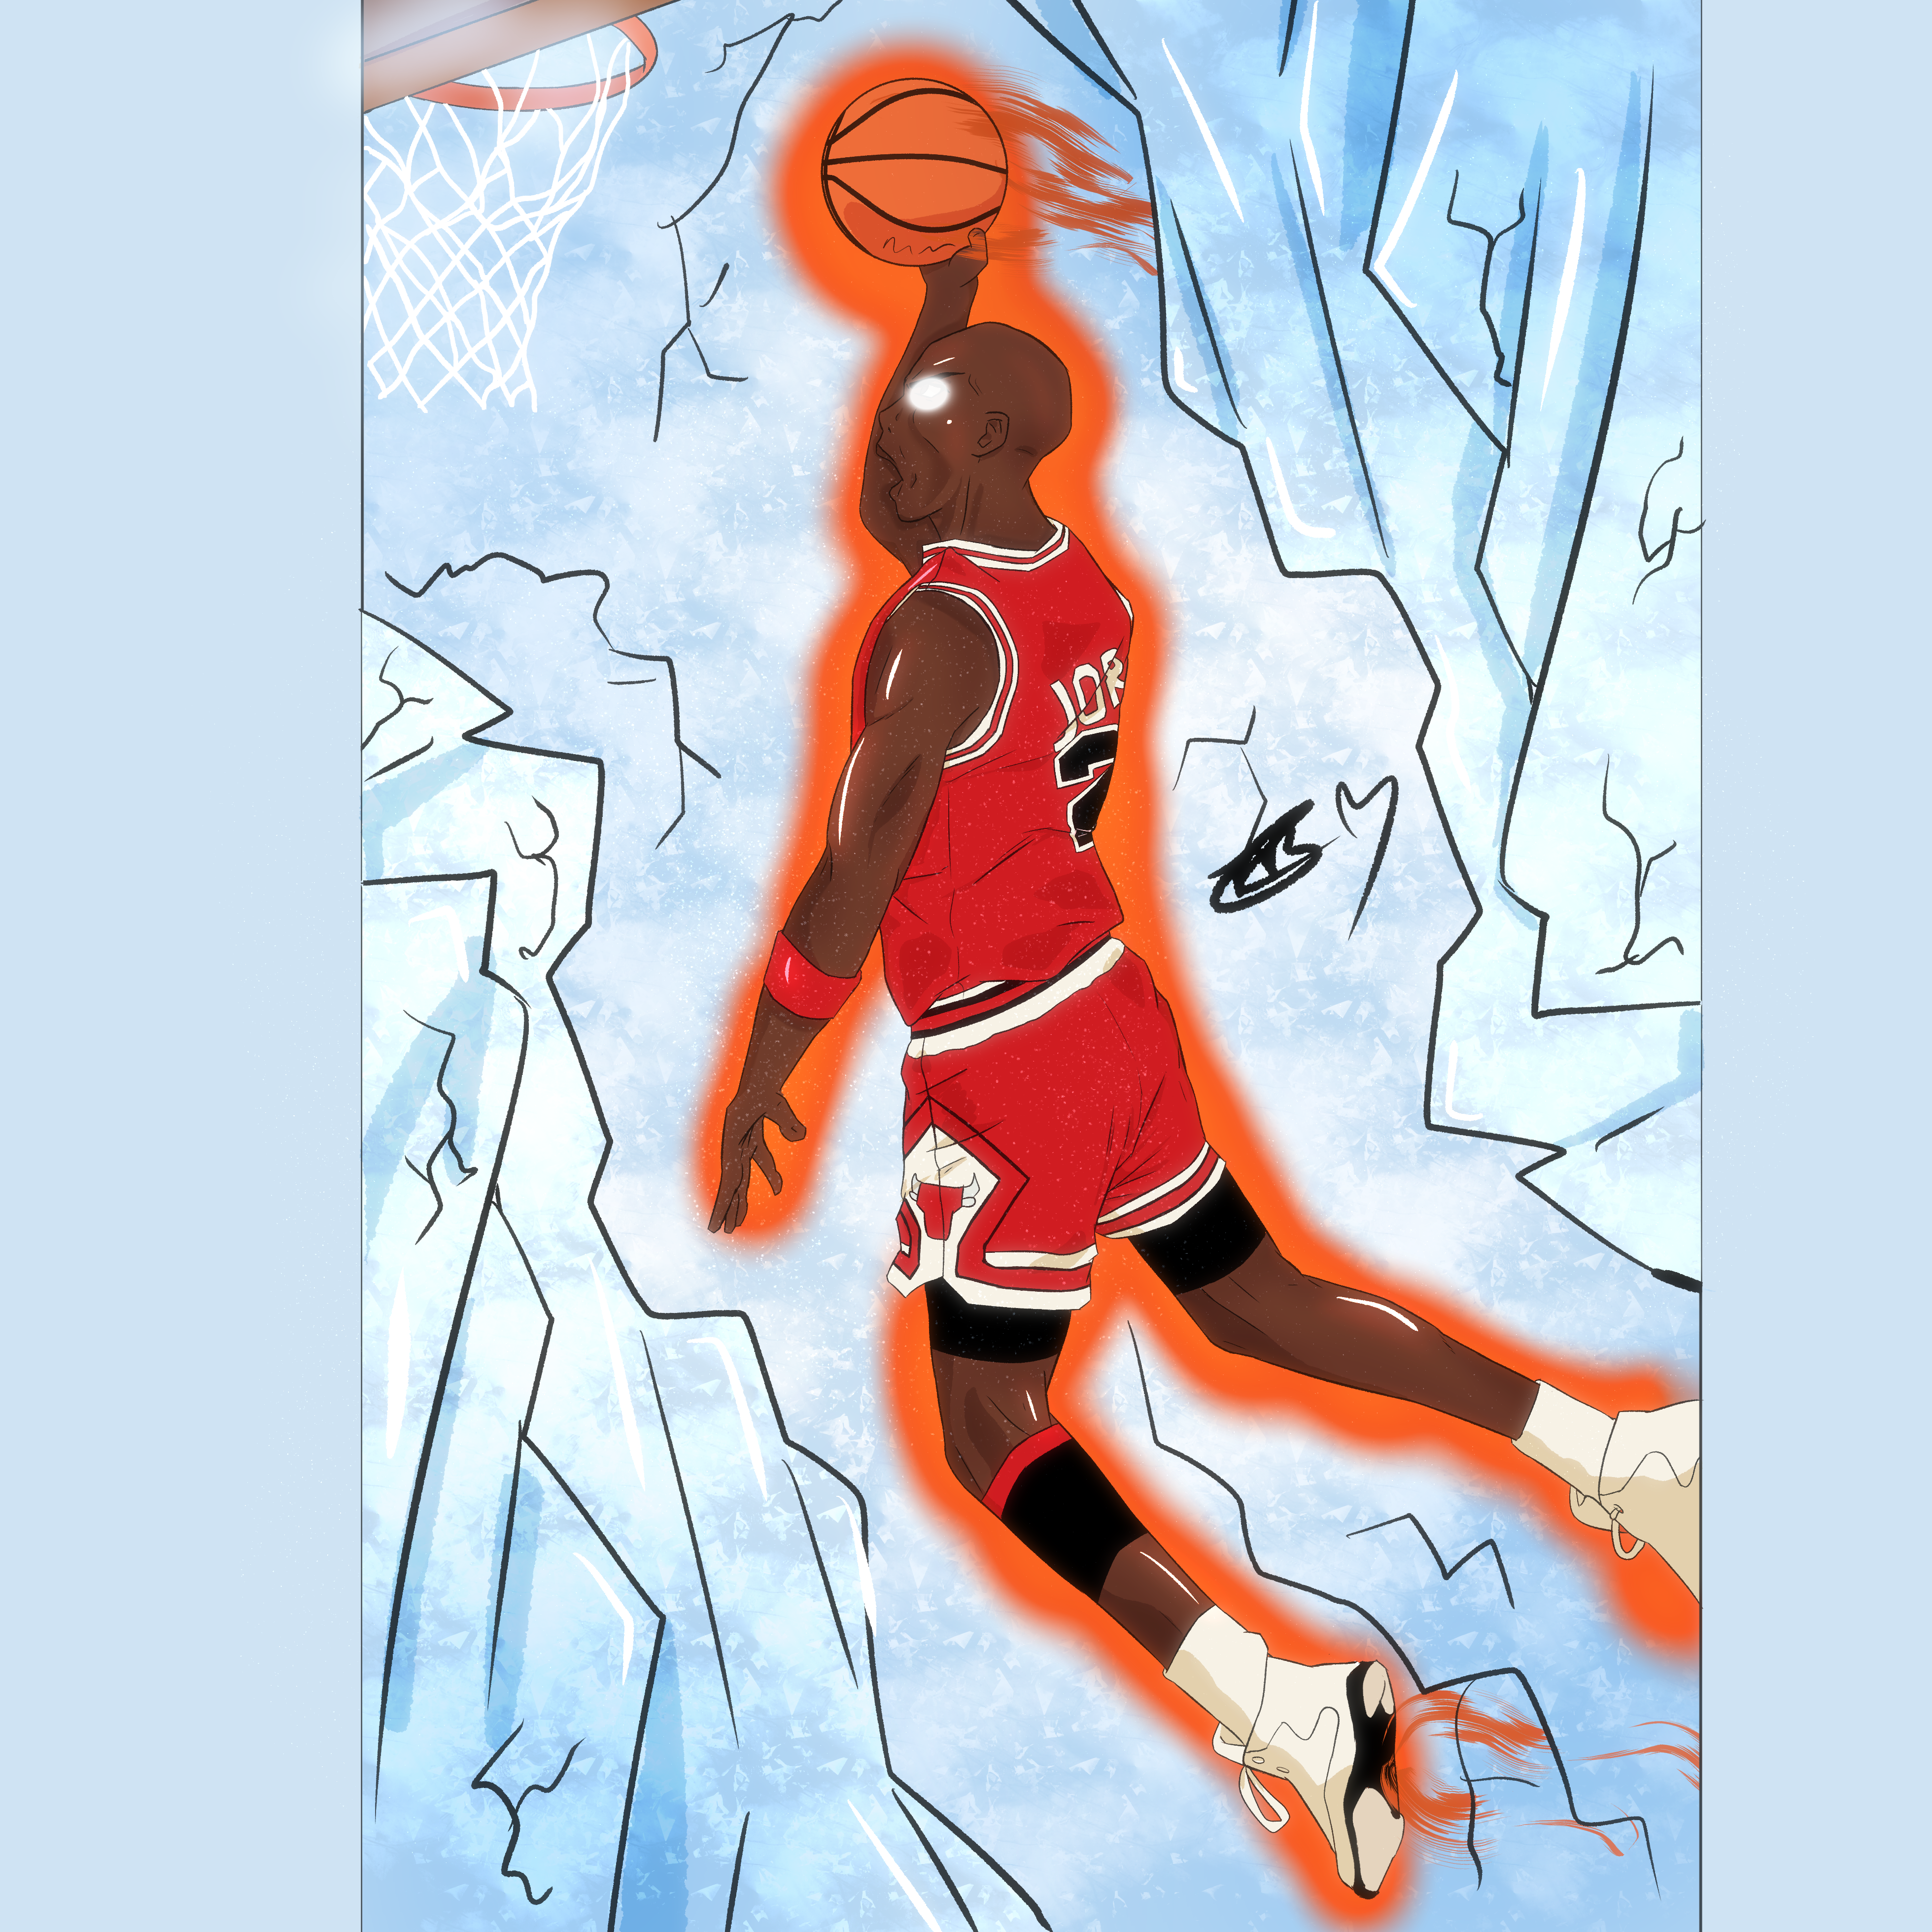 Michael Jordan drawing